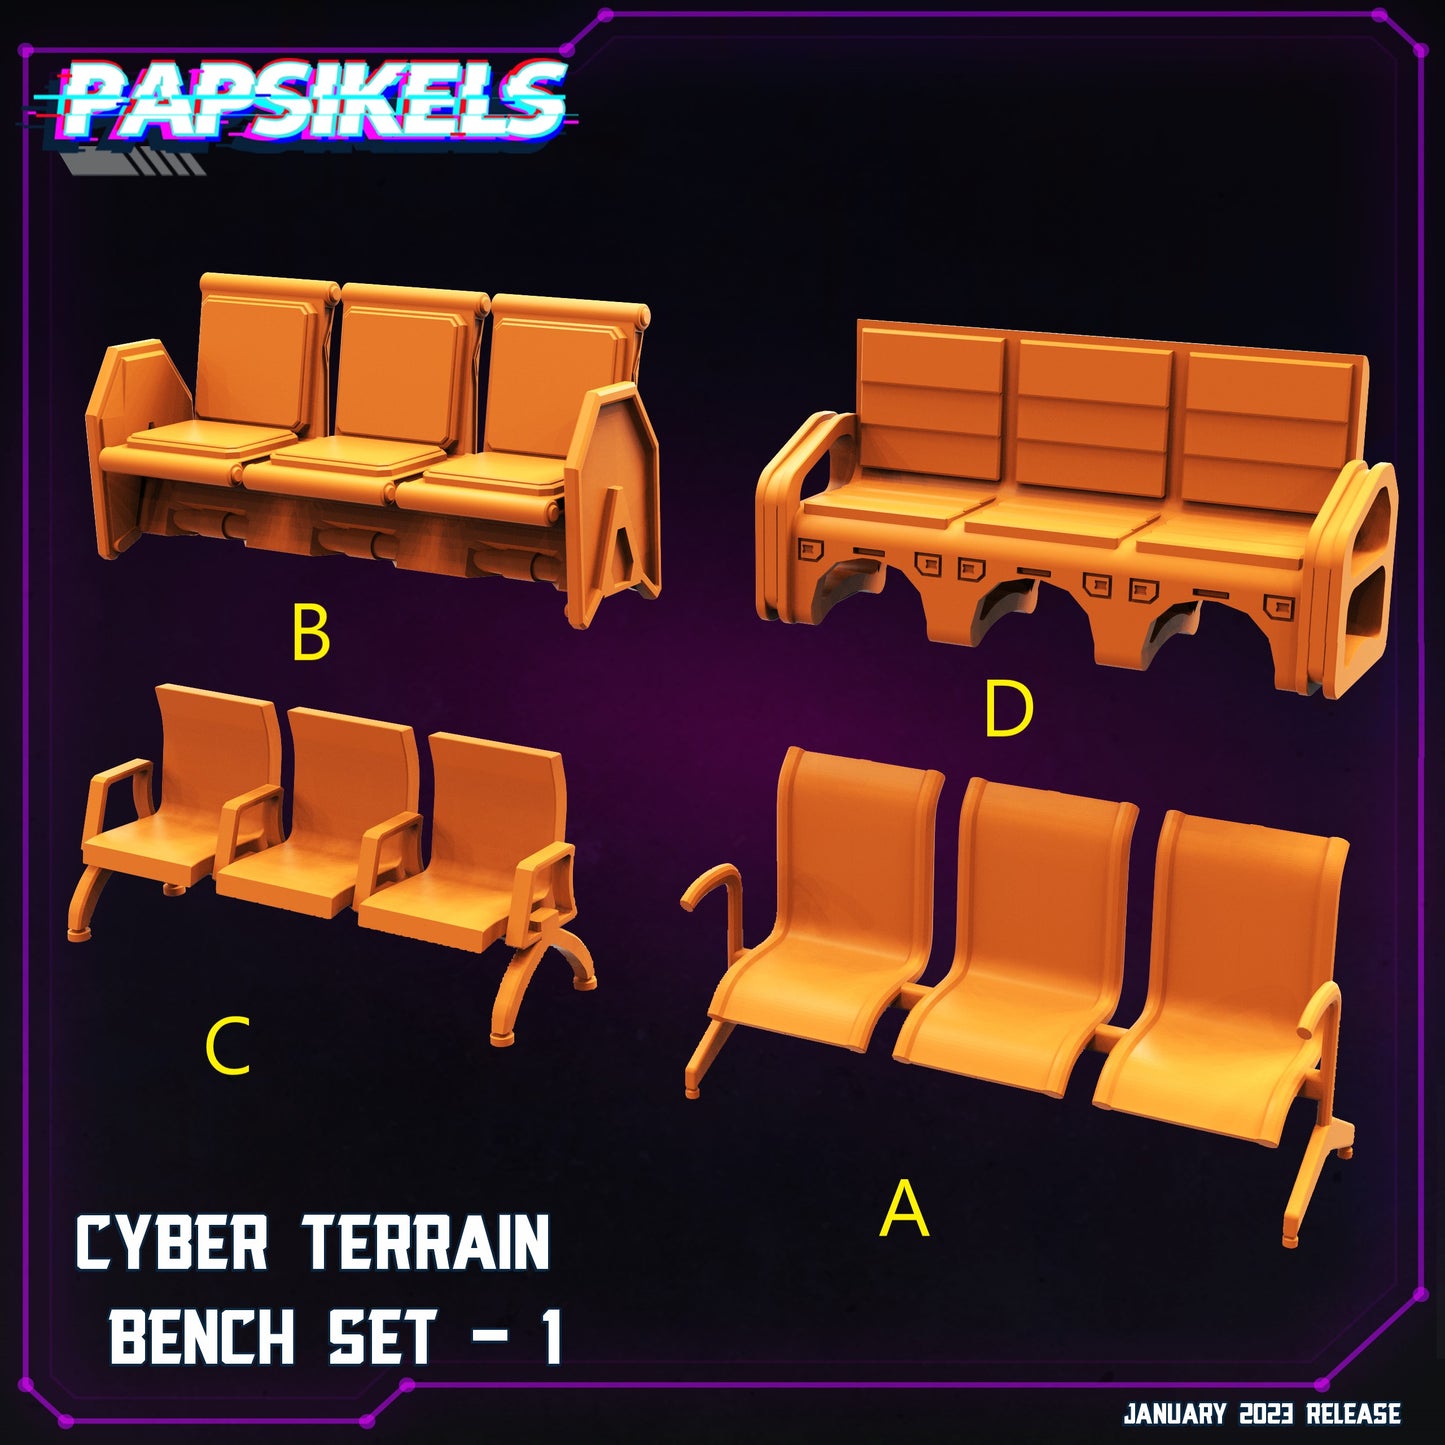 Cyber Terrain Bench Set 1